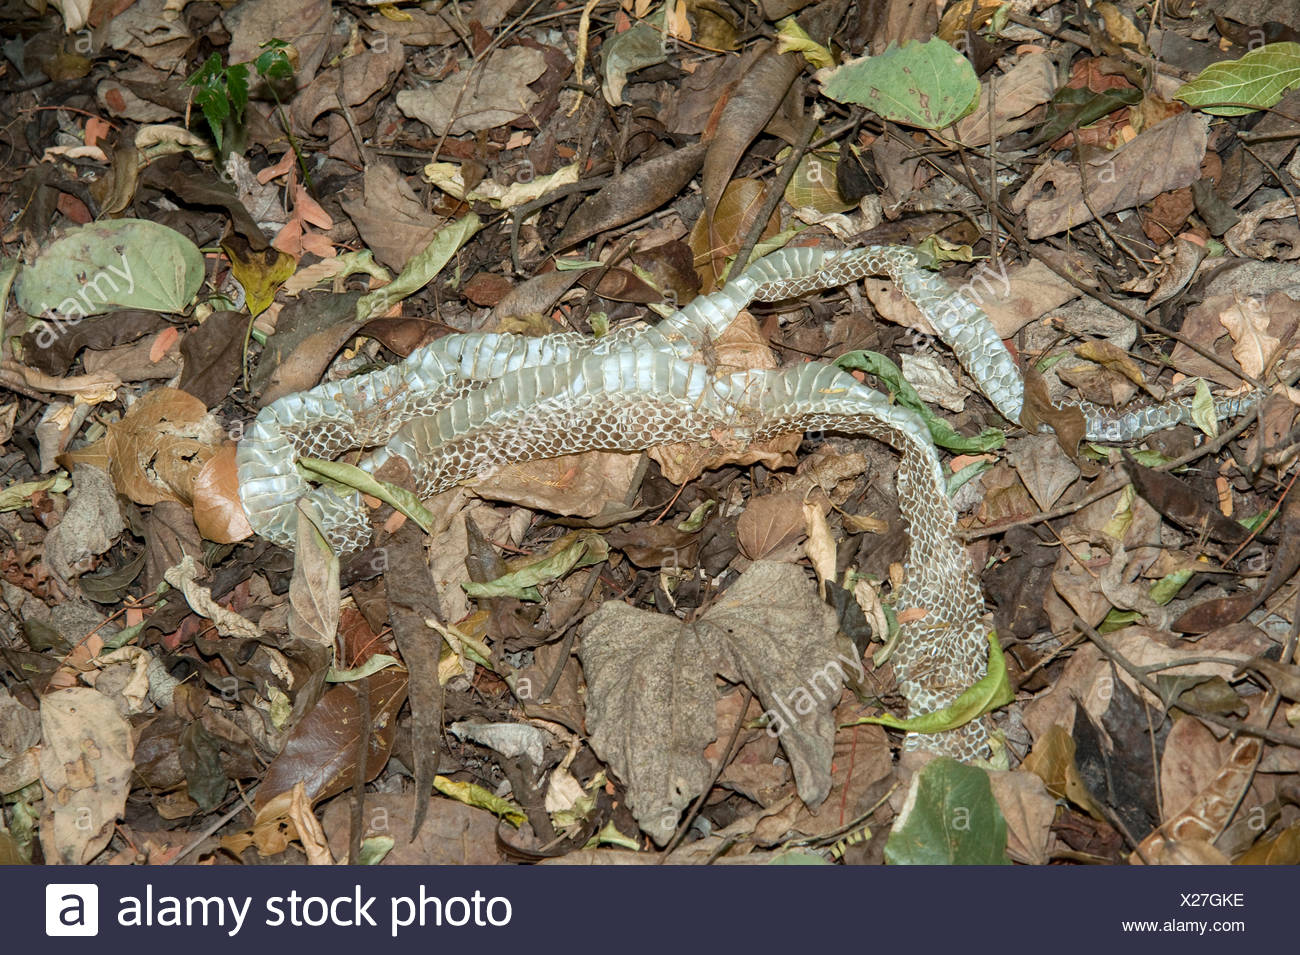 Snake Skin On Forest Floor Madagascar Stock Photo 276761954 Alamy